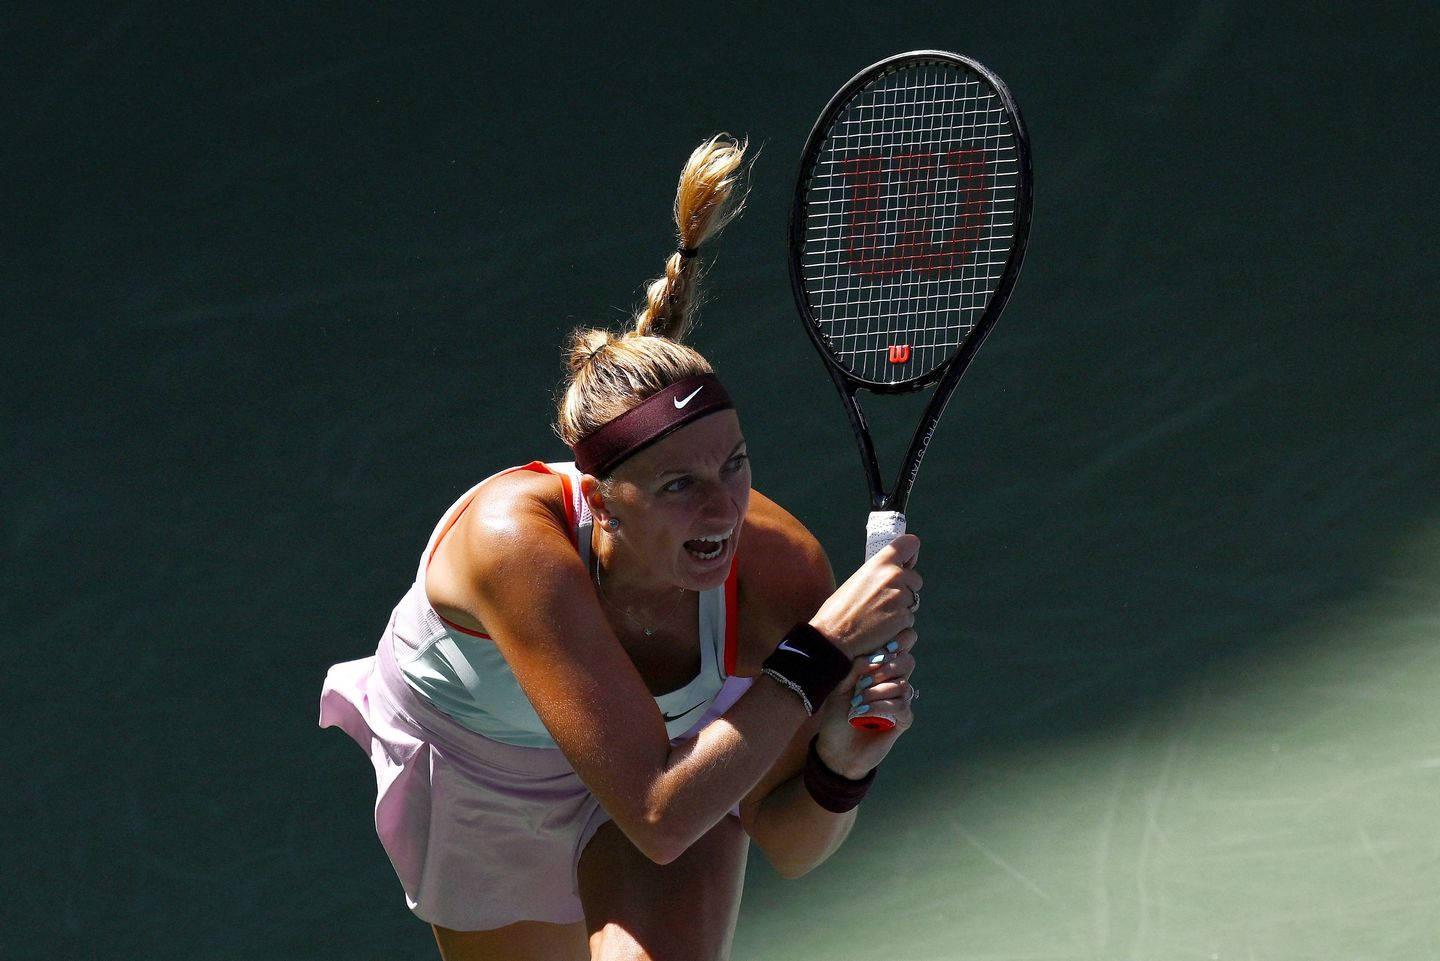 Petra Kvitova in Action - Dominating the Tennis Court Wallpaper